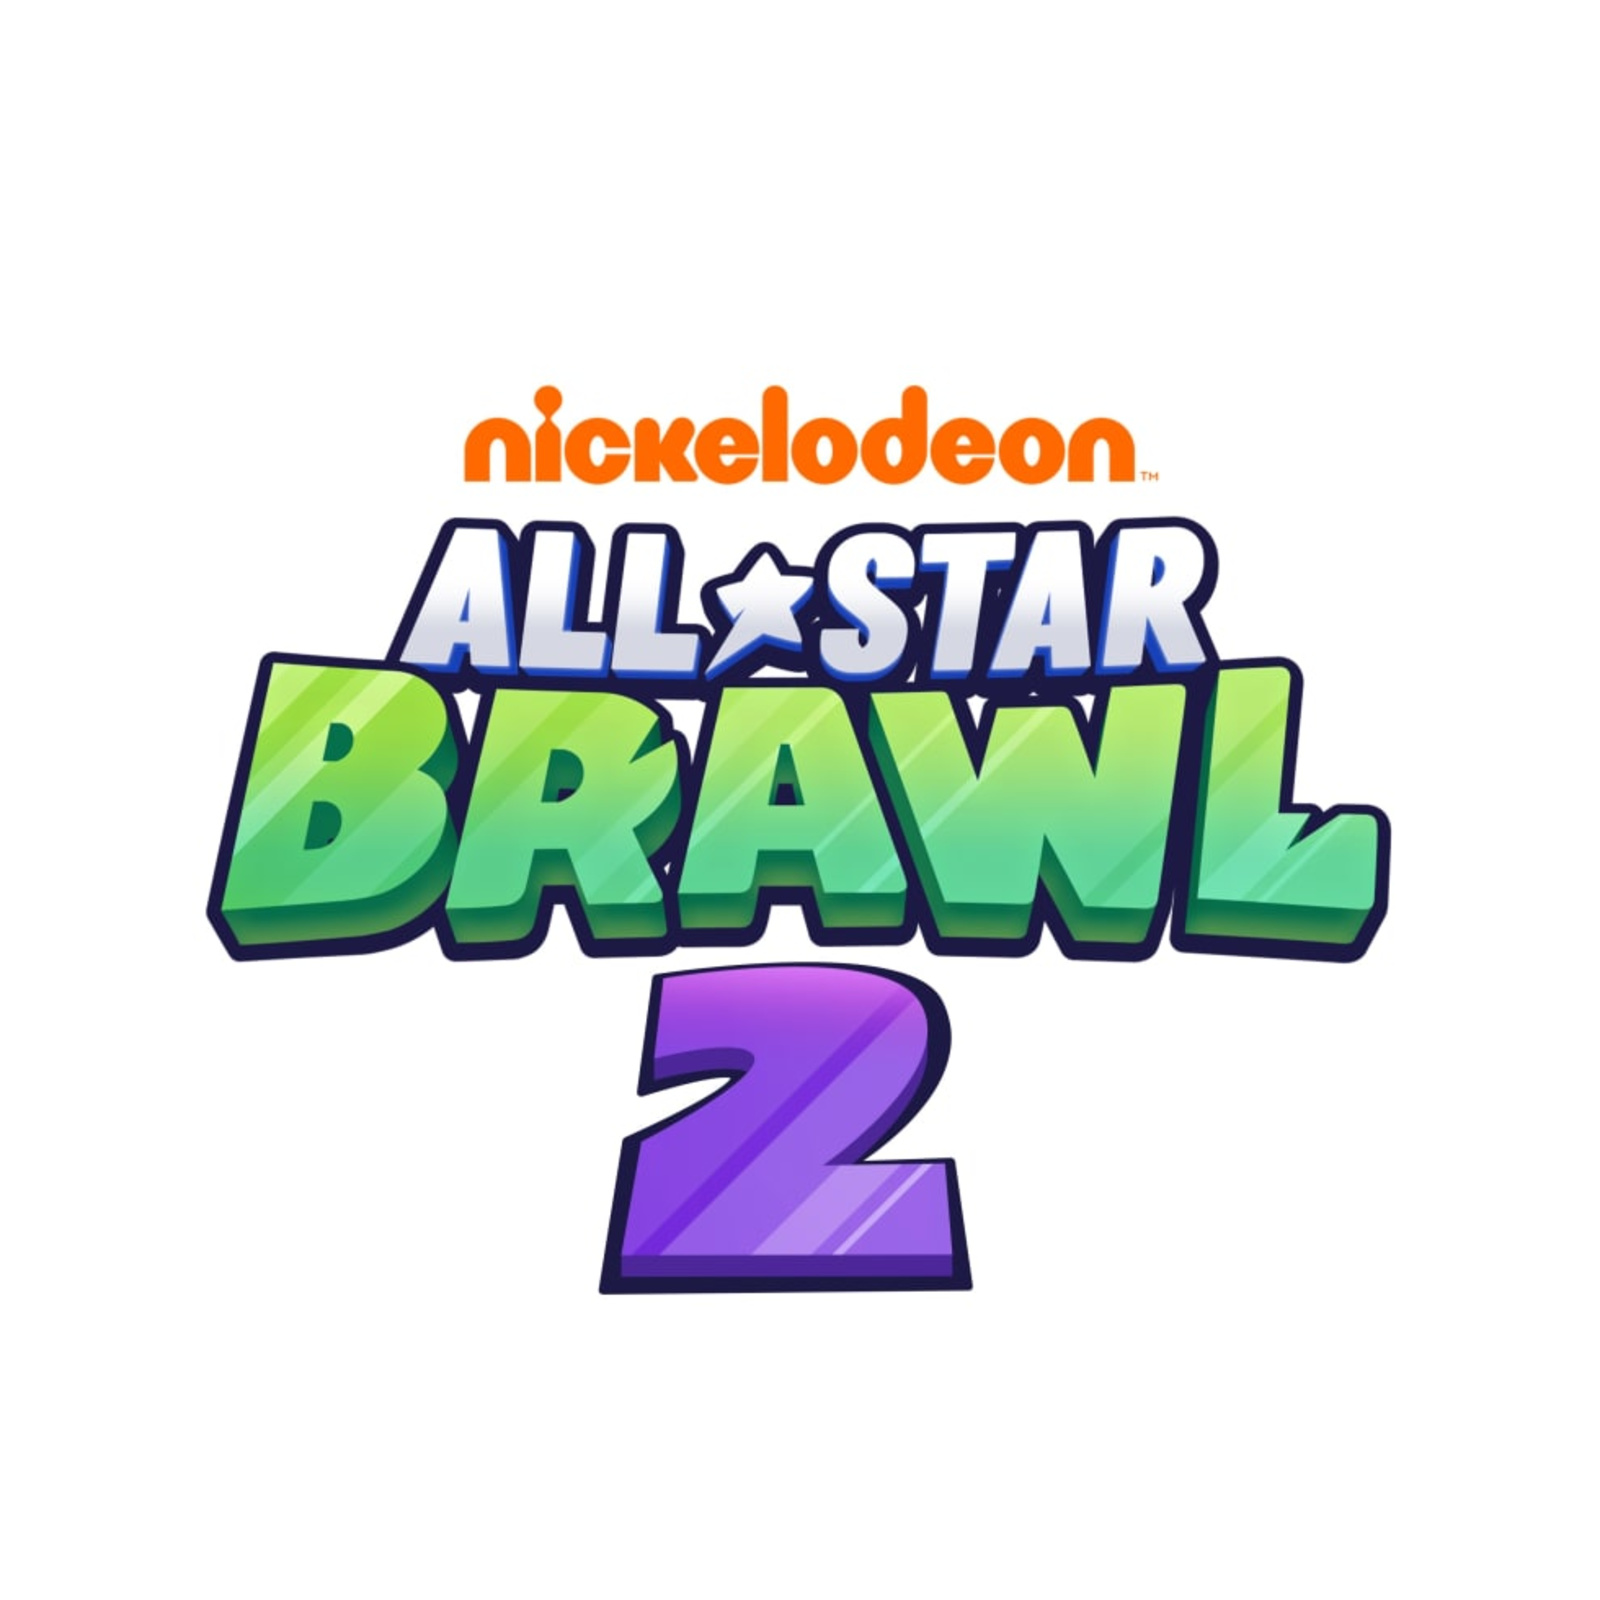 Nickelodeon All Star Brawl - PlayStation 5, PlayStation 5